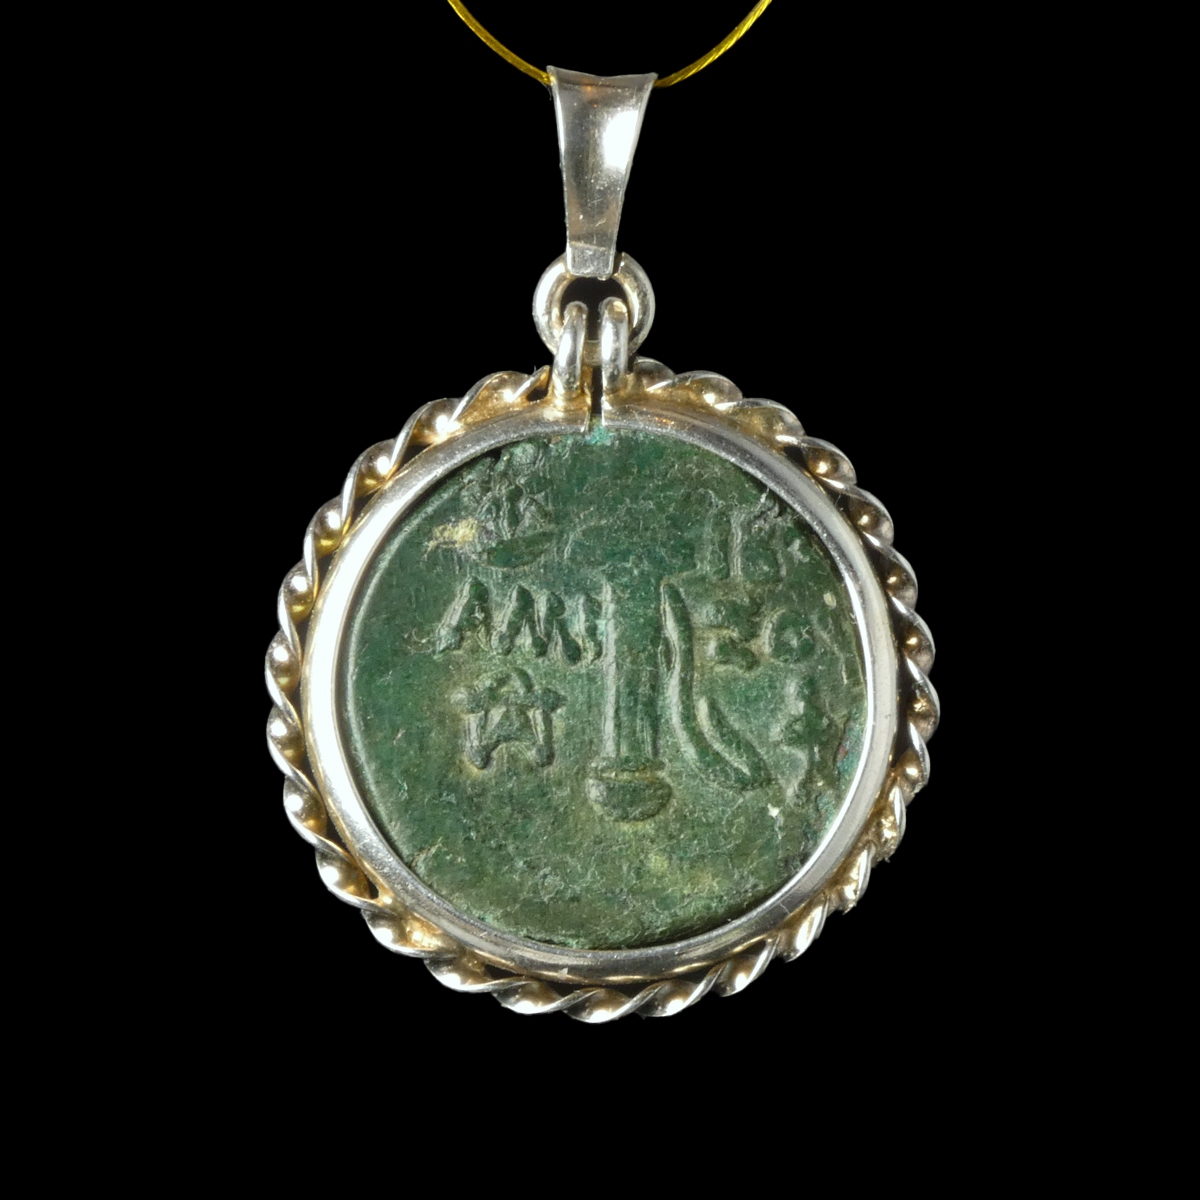 Silver pendant with ancient Amisos coin, Mithradates VI